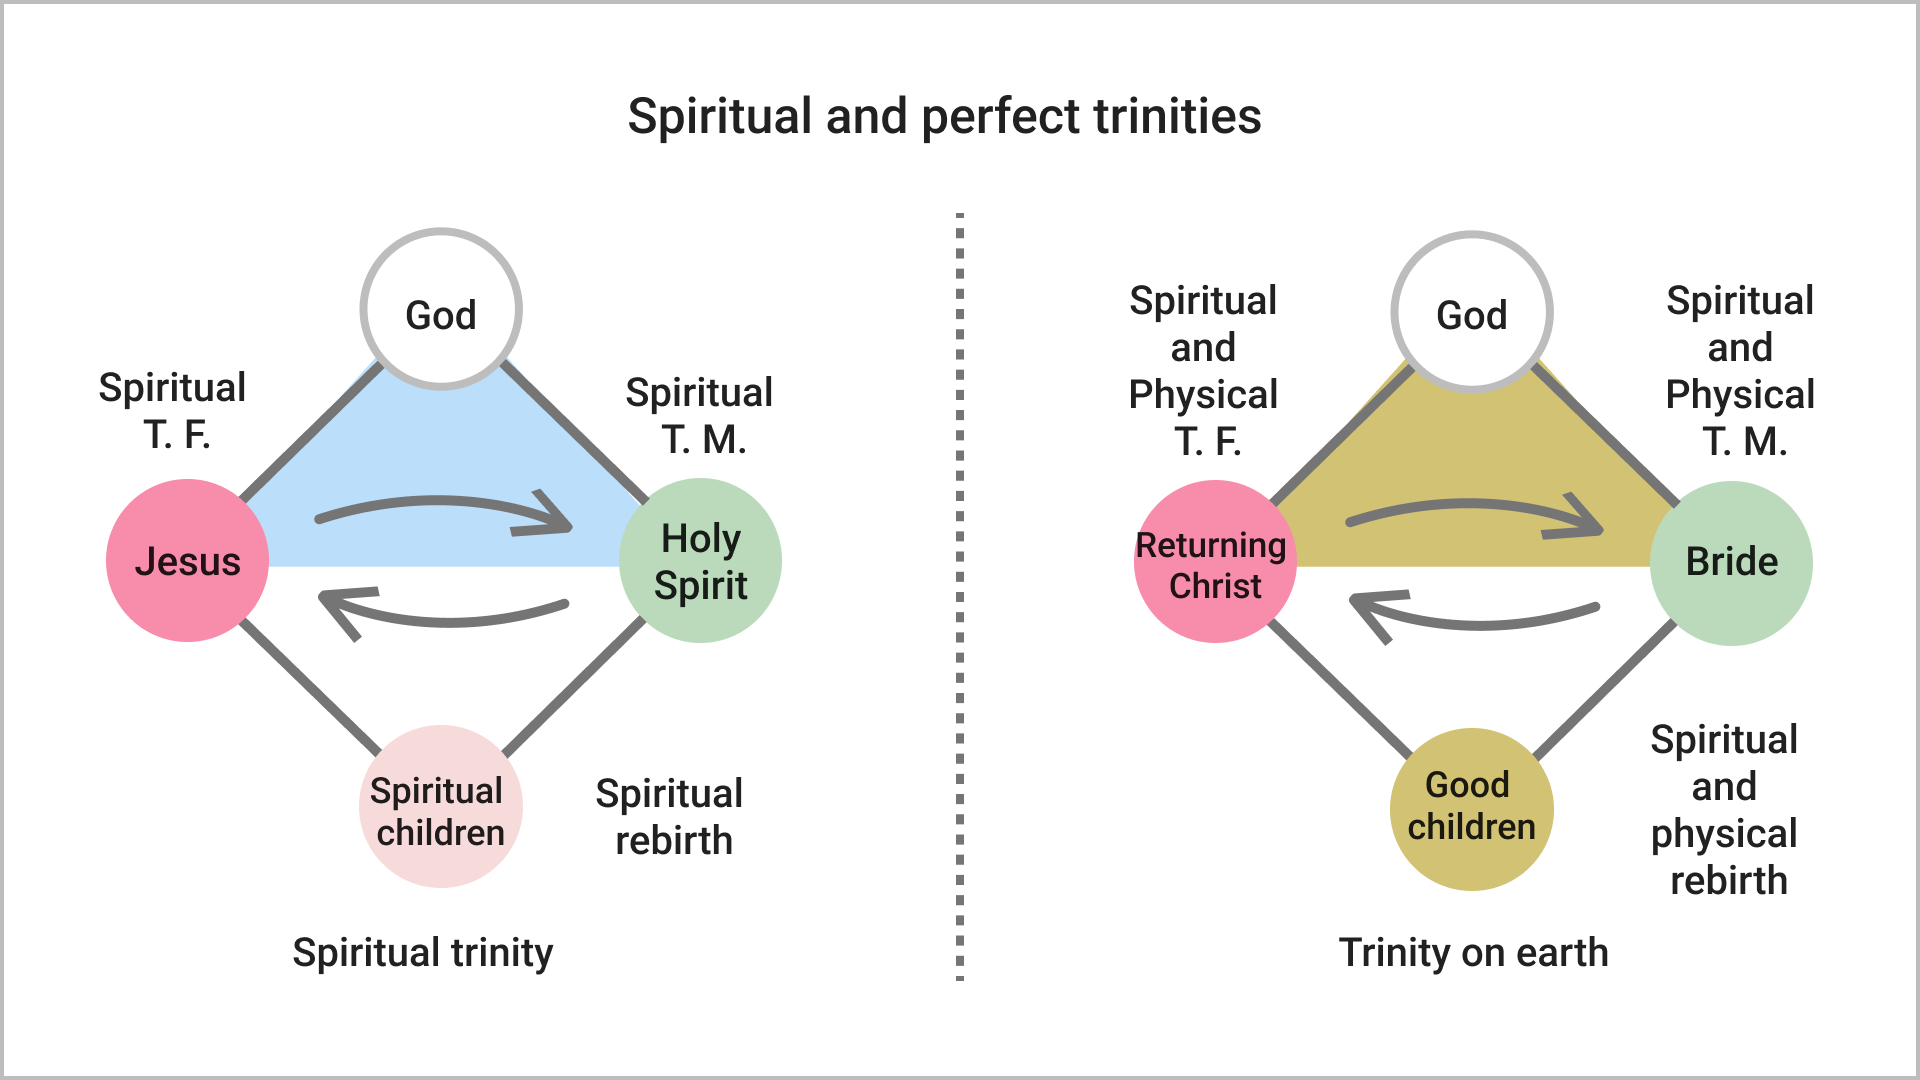 Spiritual and perfect trinities